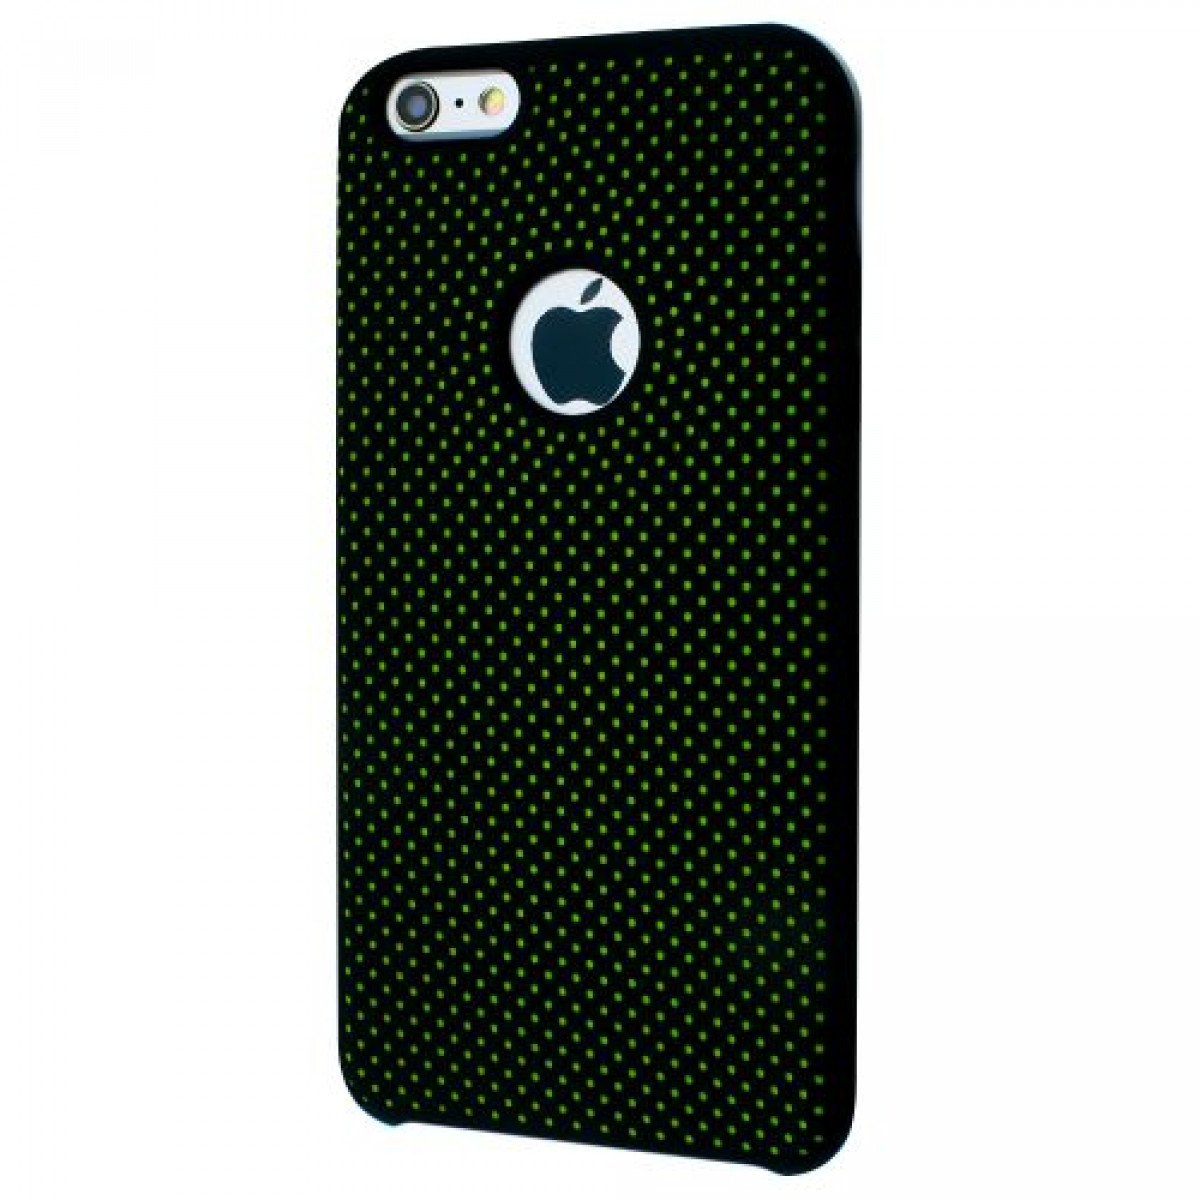 Dot Case Apple iPhone 6